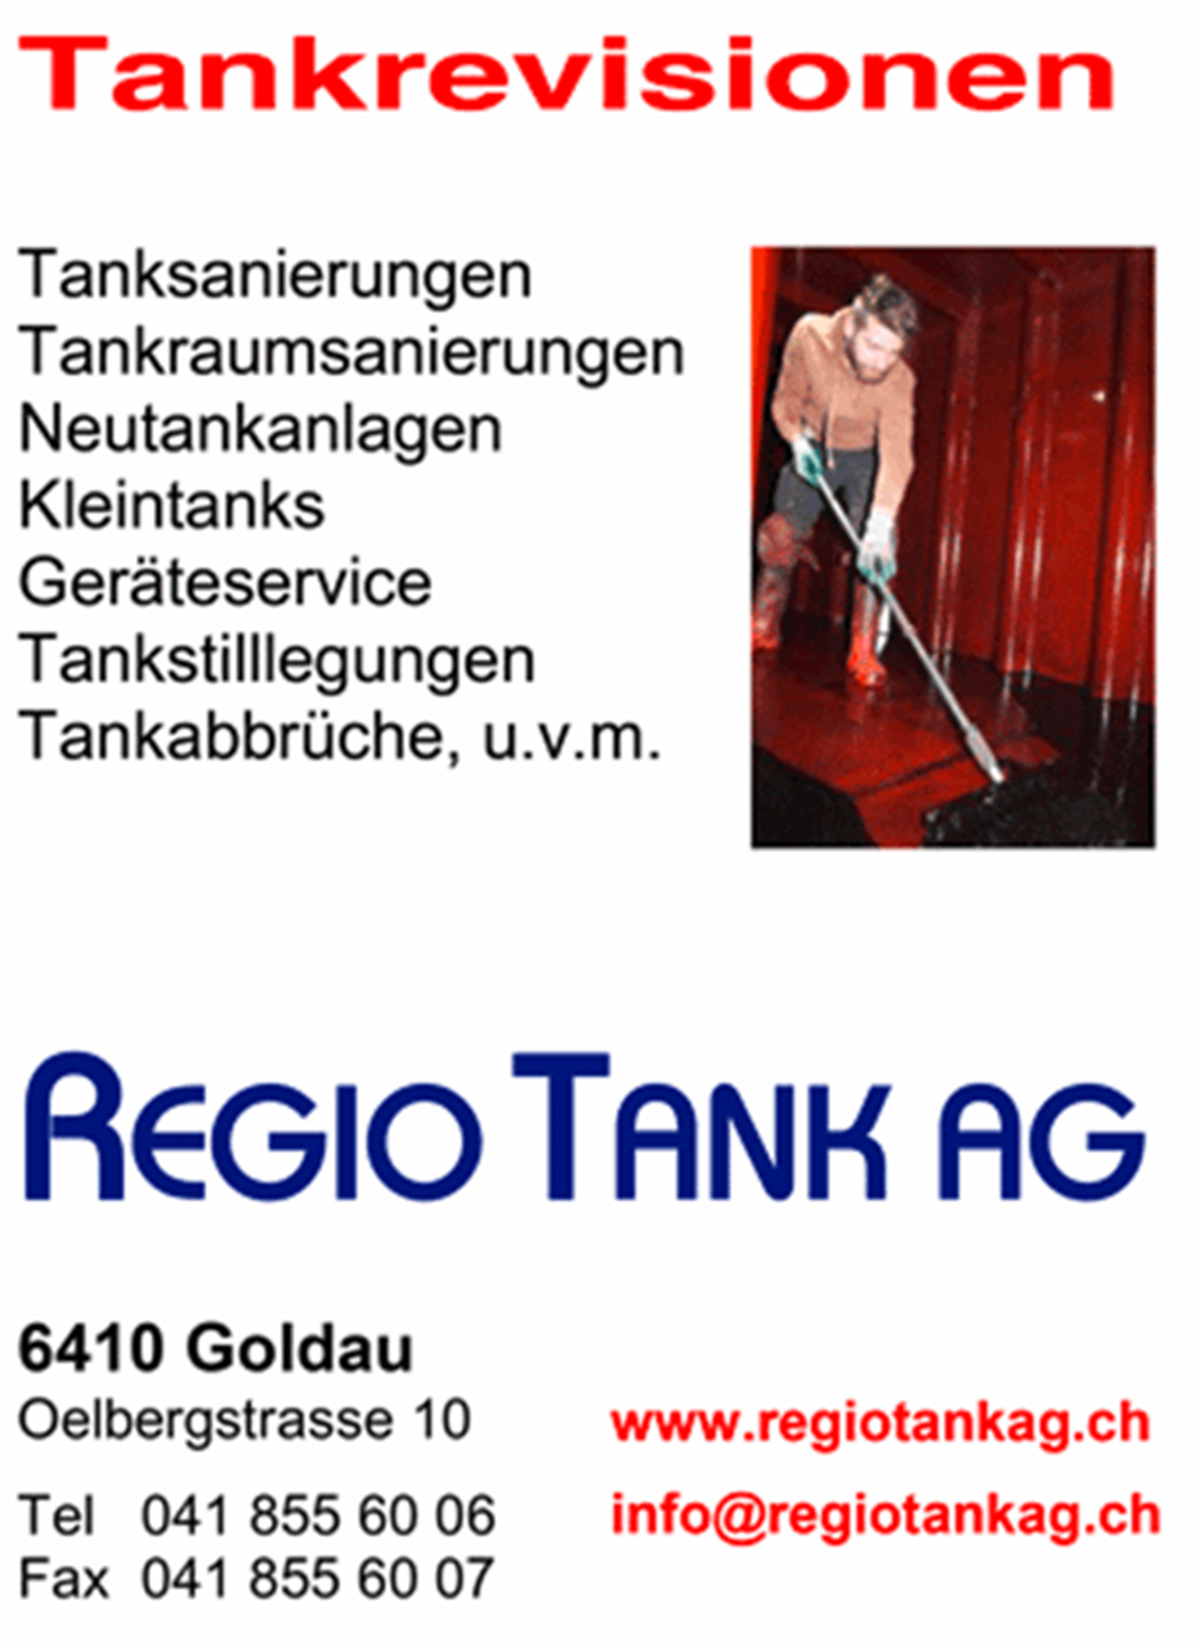 Regio Tank AG